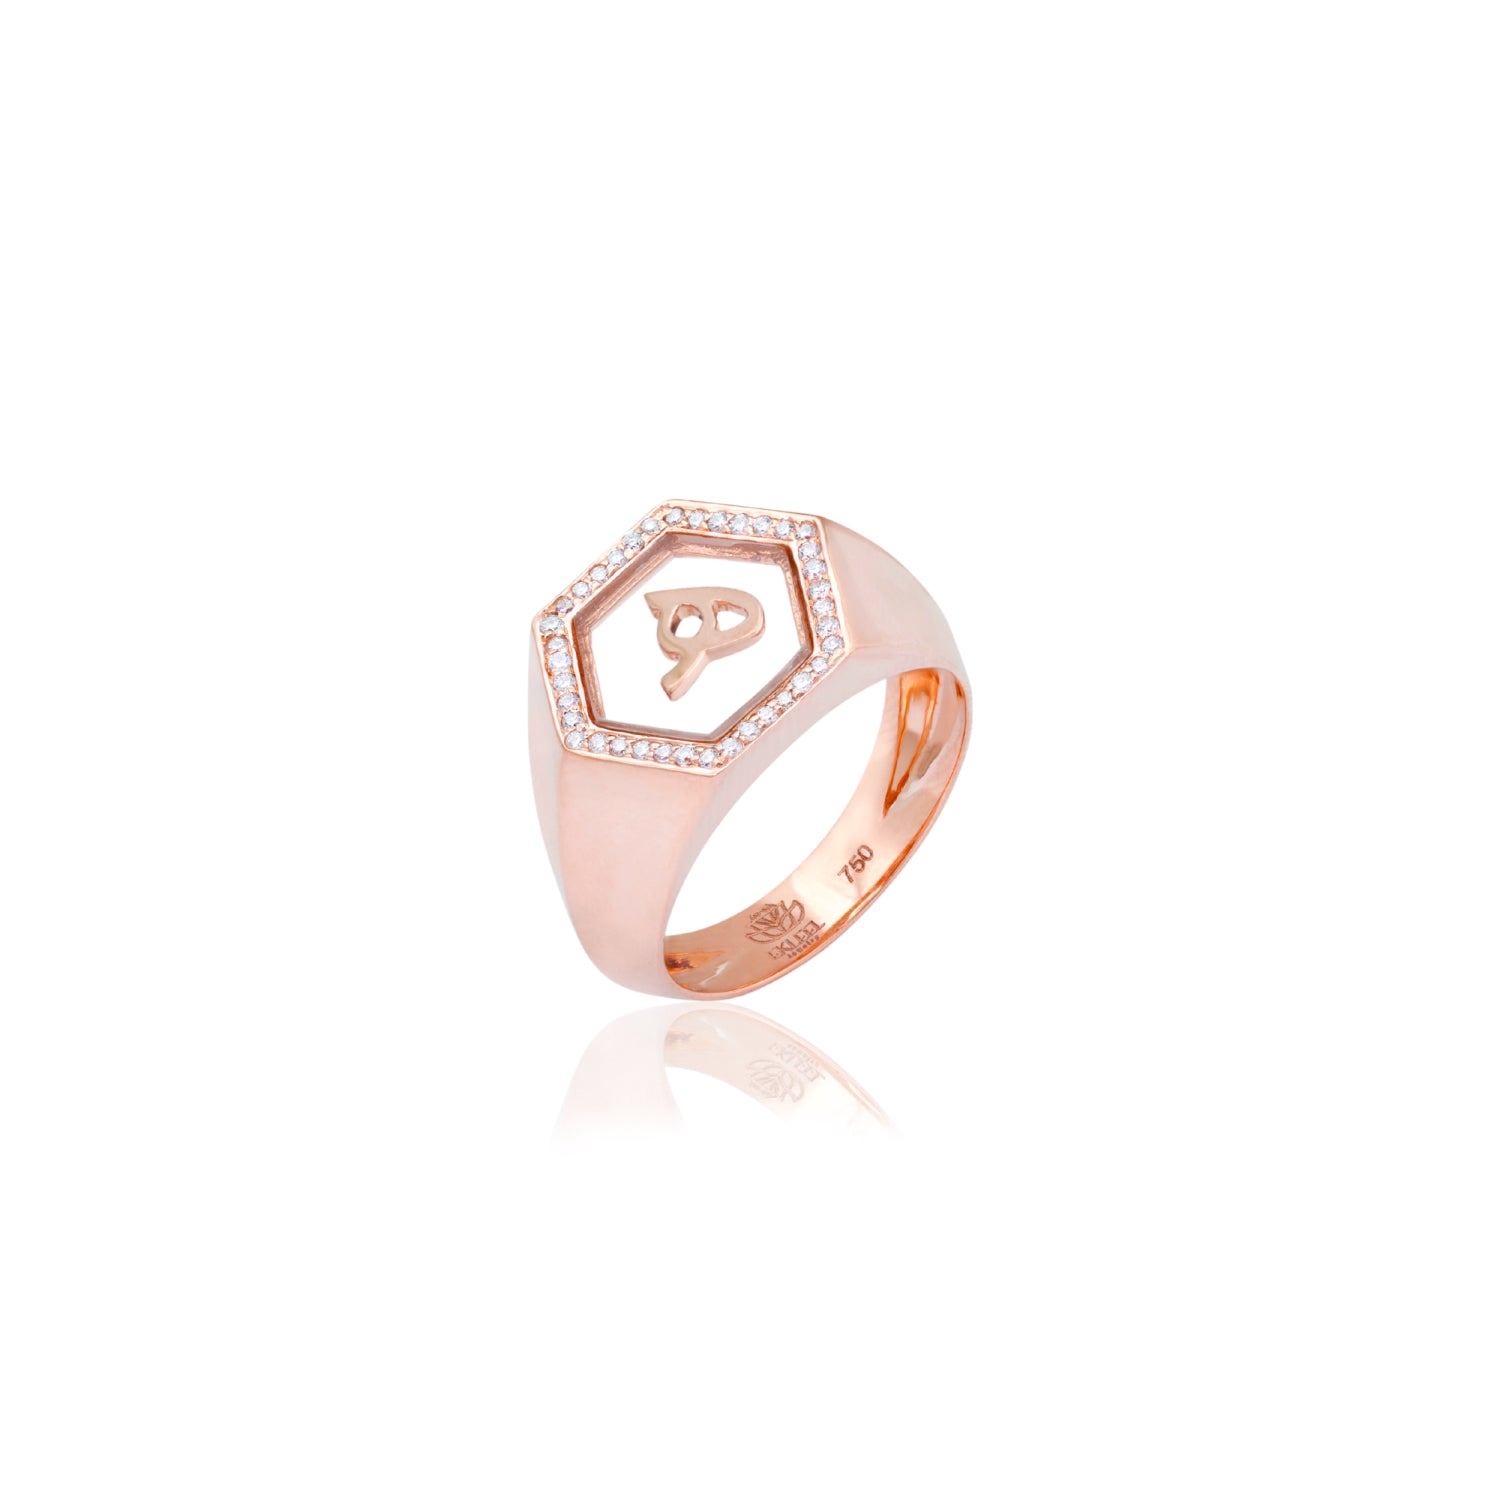 Qamoos 2.0 Letter هـ Plexiglass and Diamond Signet Ring in Rose Gold